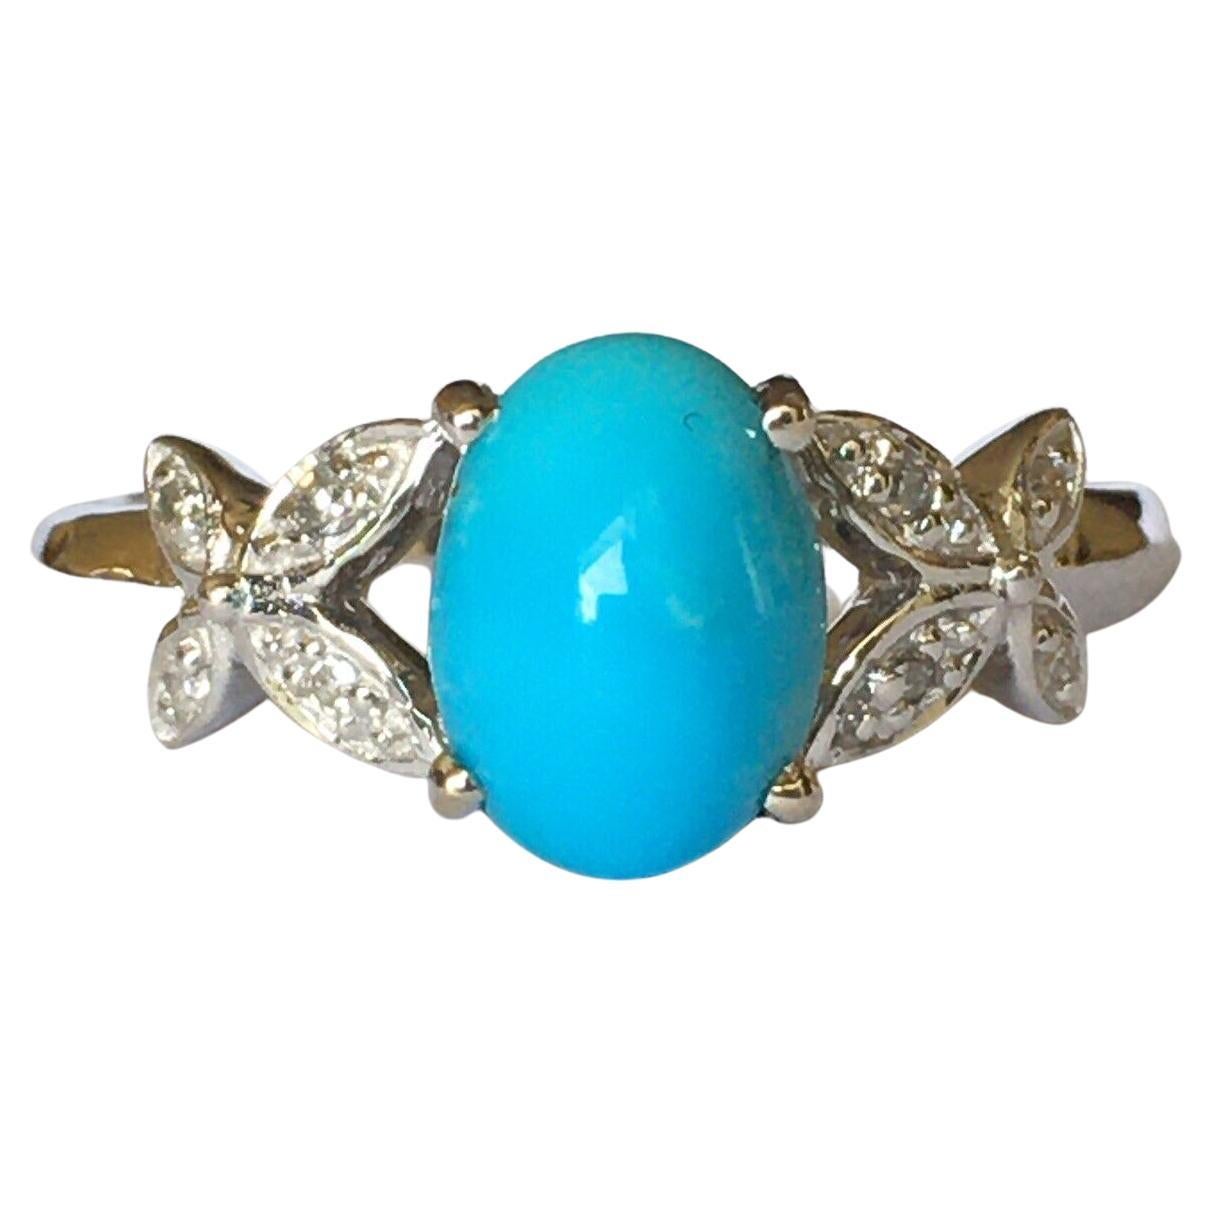 14 Karat White Gold Hallmarked Lady's Diamond Persian Turquoise Ring 1970s Size For Sale